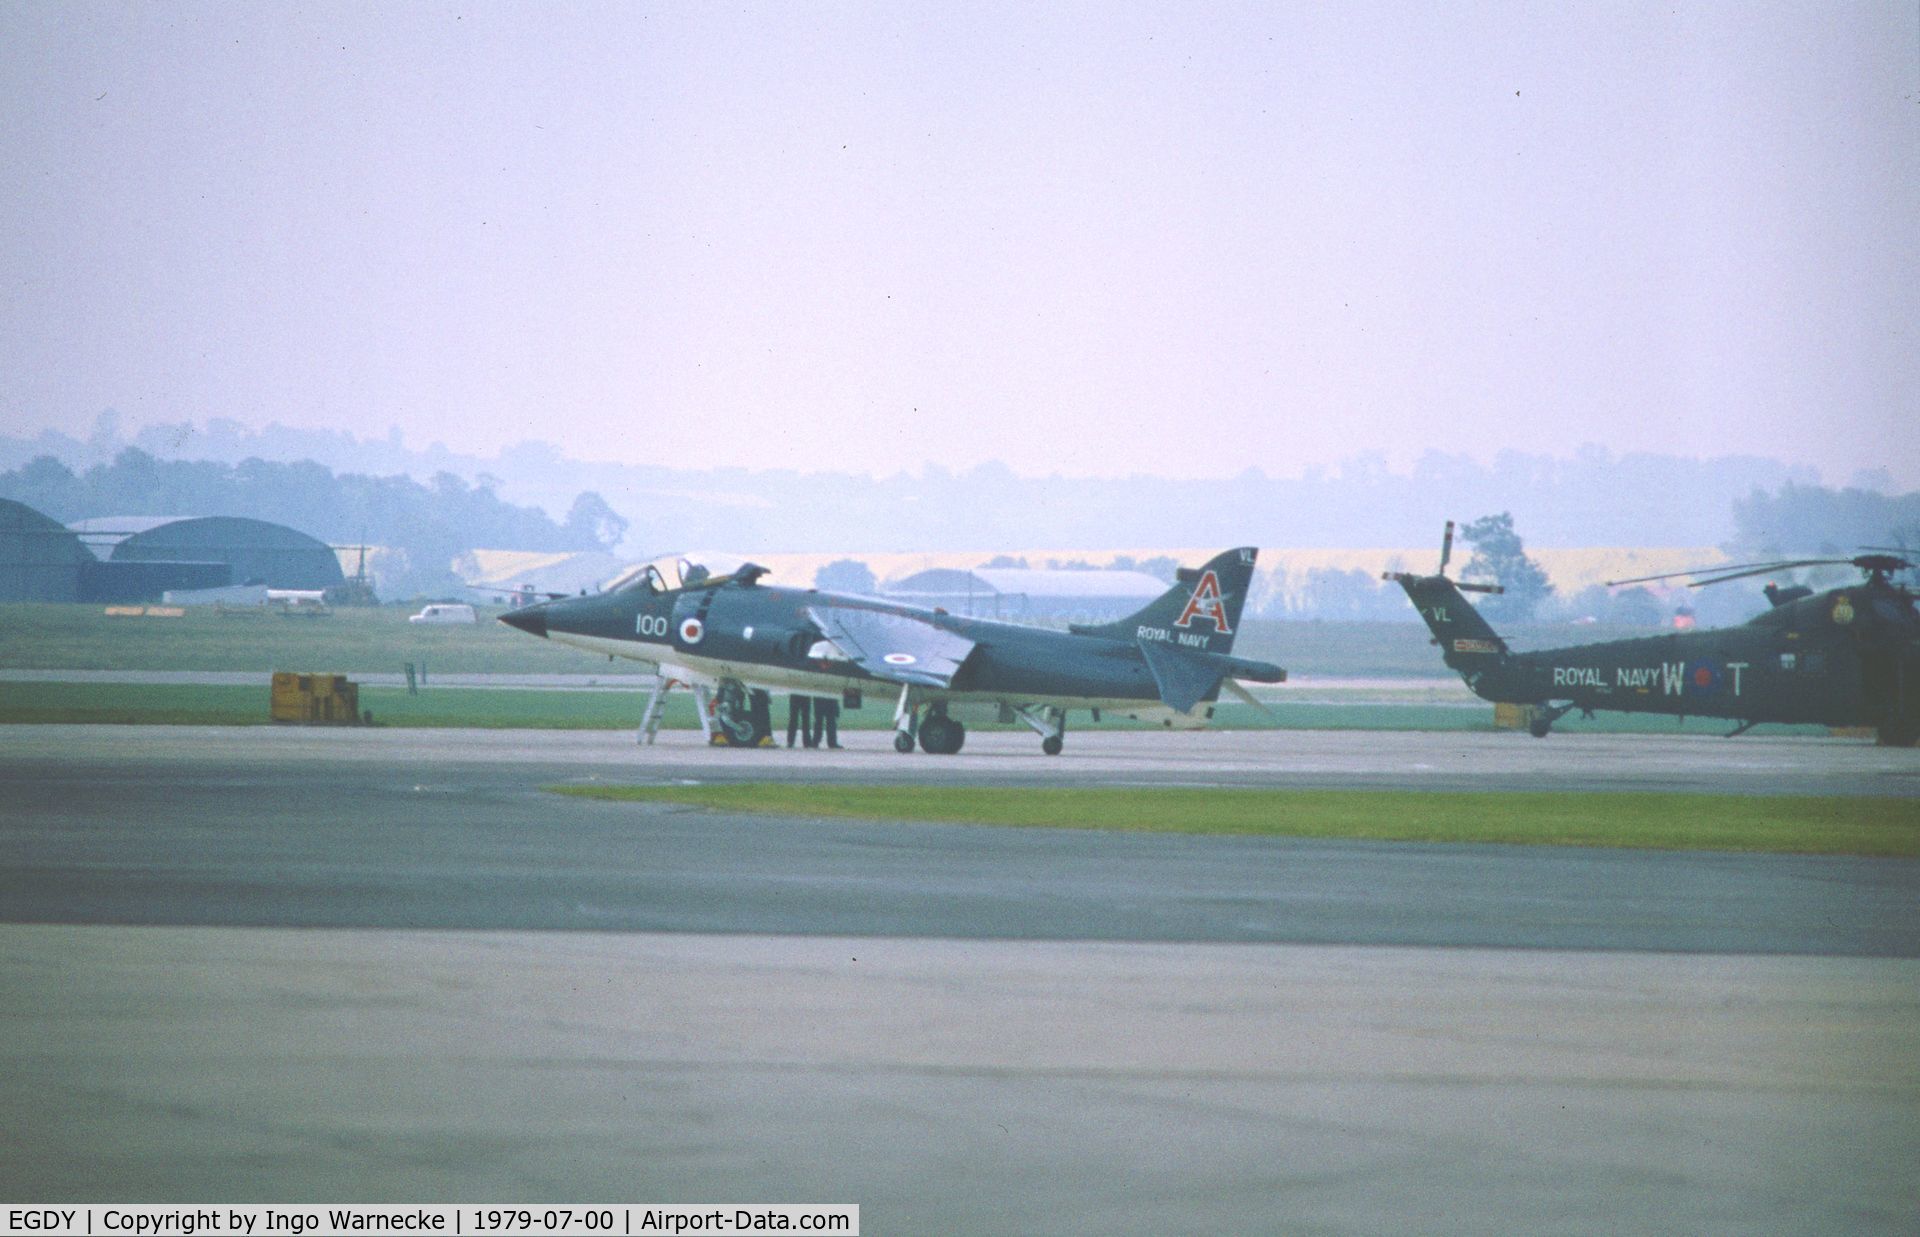 RNAS Yeovilton Airport, Yeovil, England United Kingdom (EGDY) - apron at RNAS Yeovilton with Sea Harrier